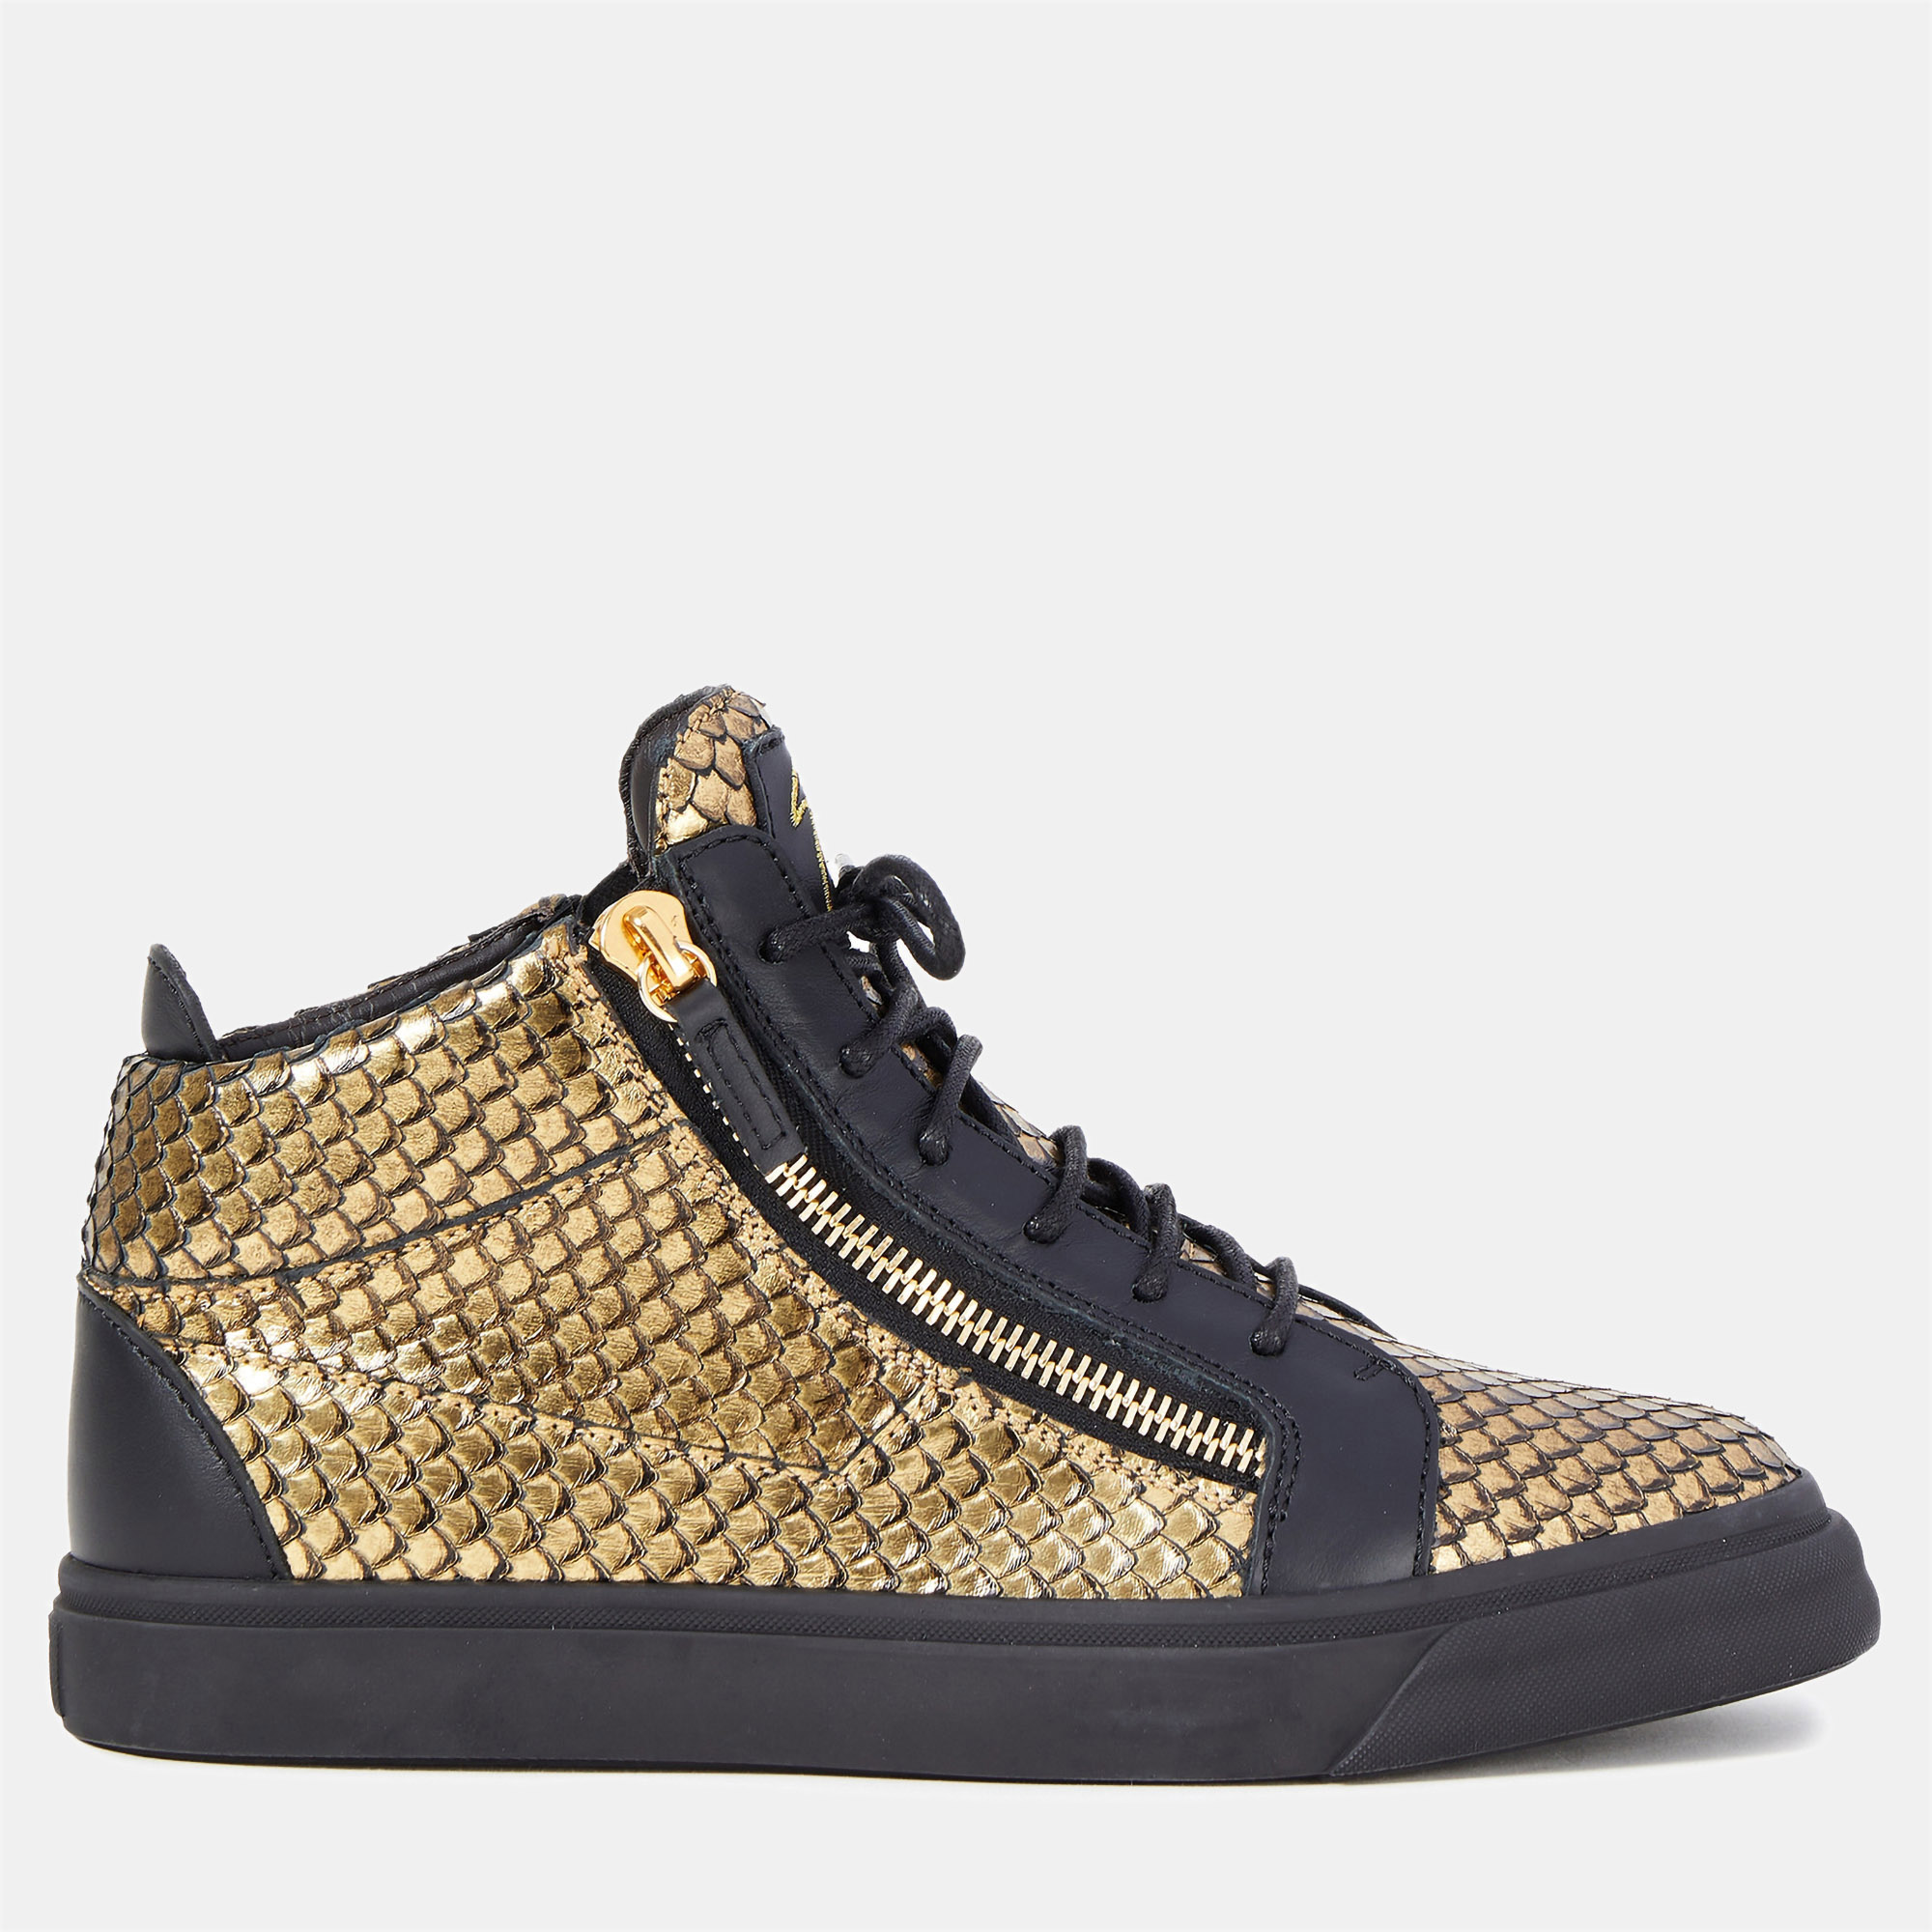 Giuseppe zanotti snakeskin embossed leather sneakers size 38